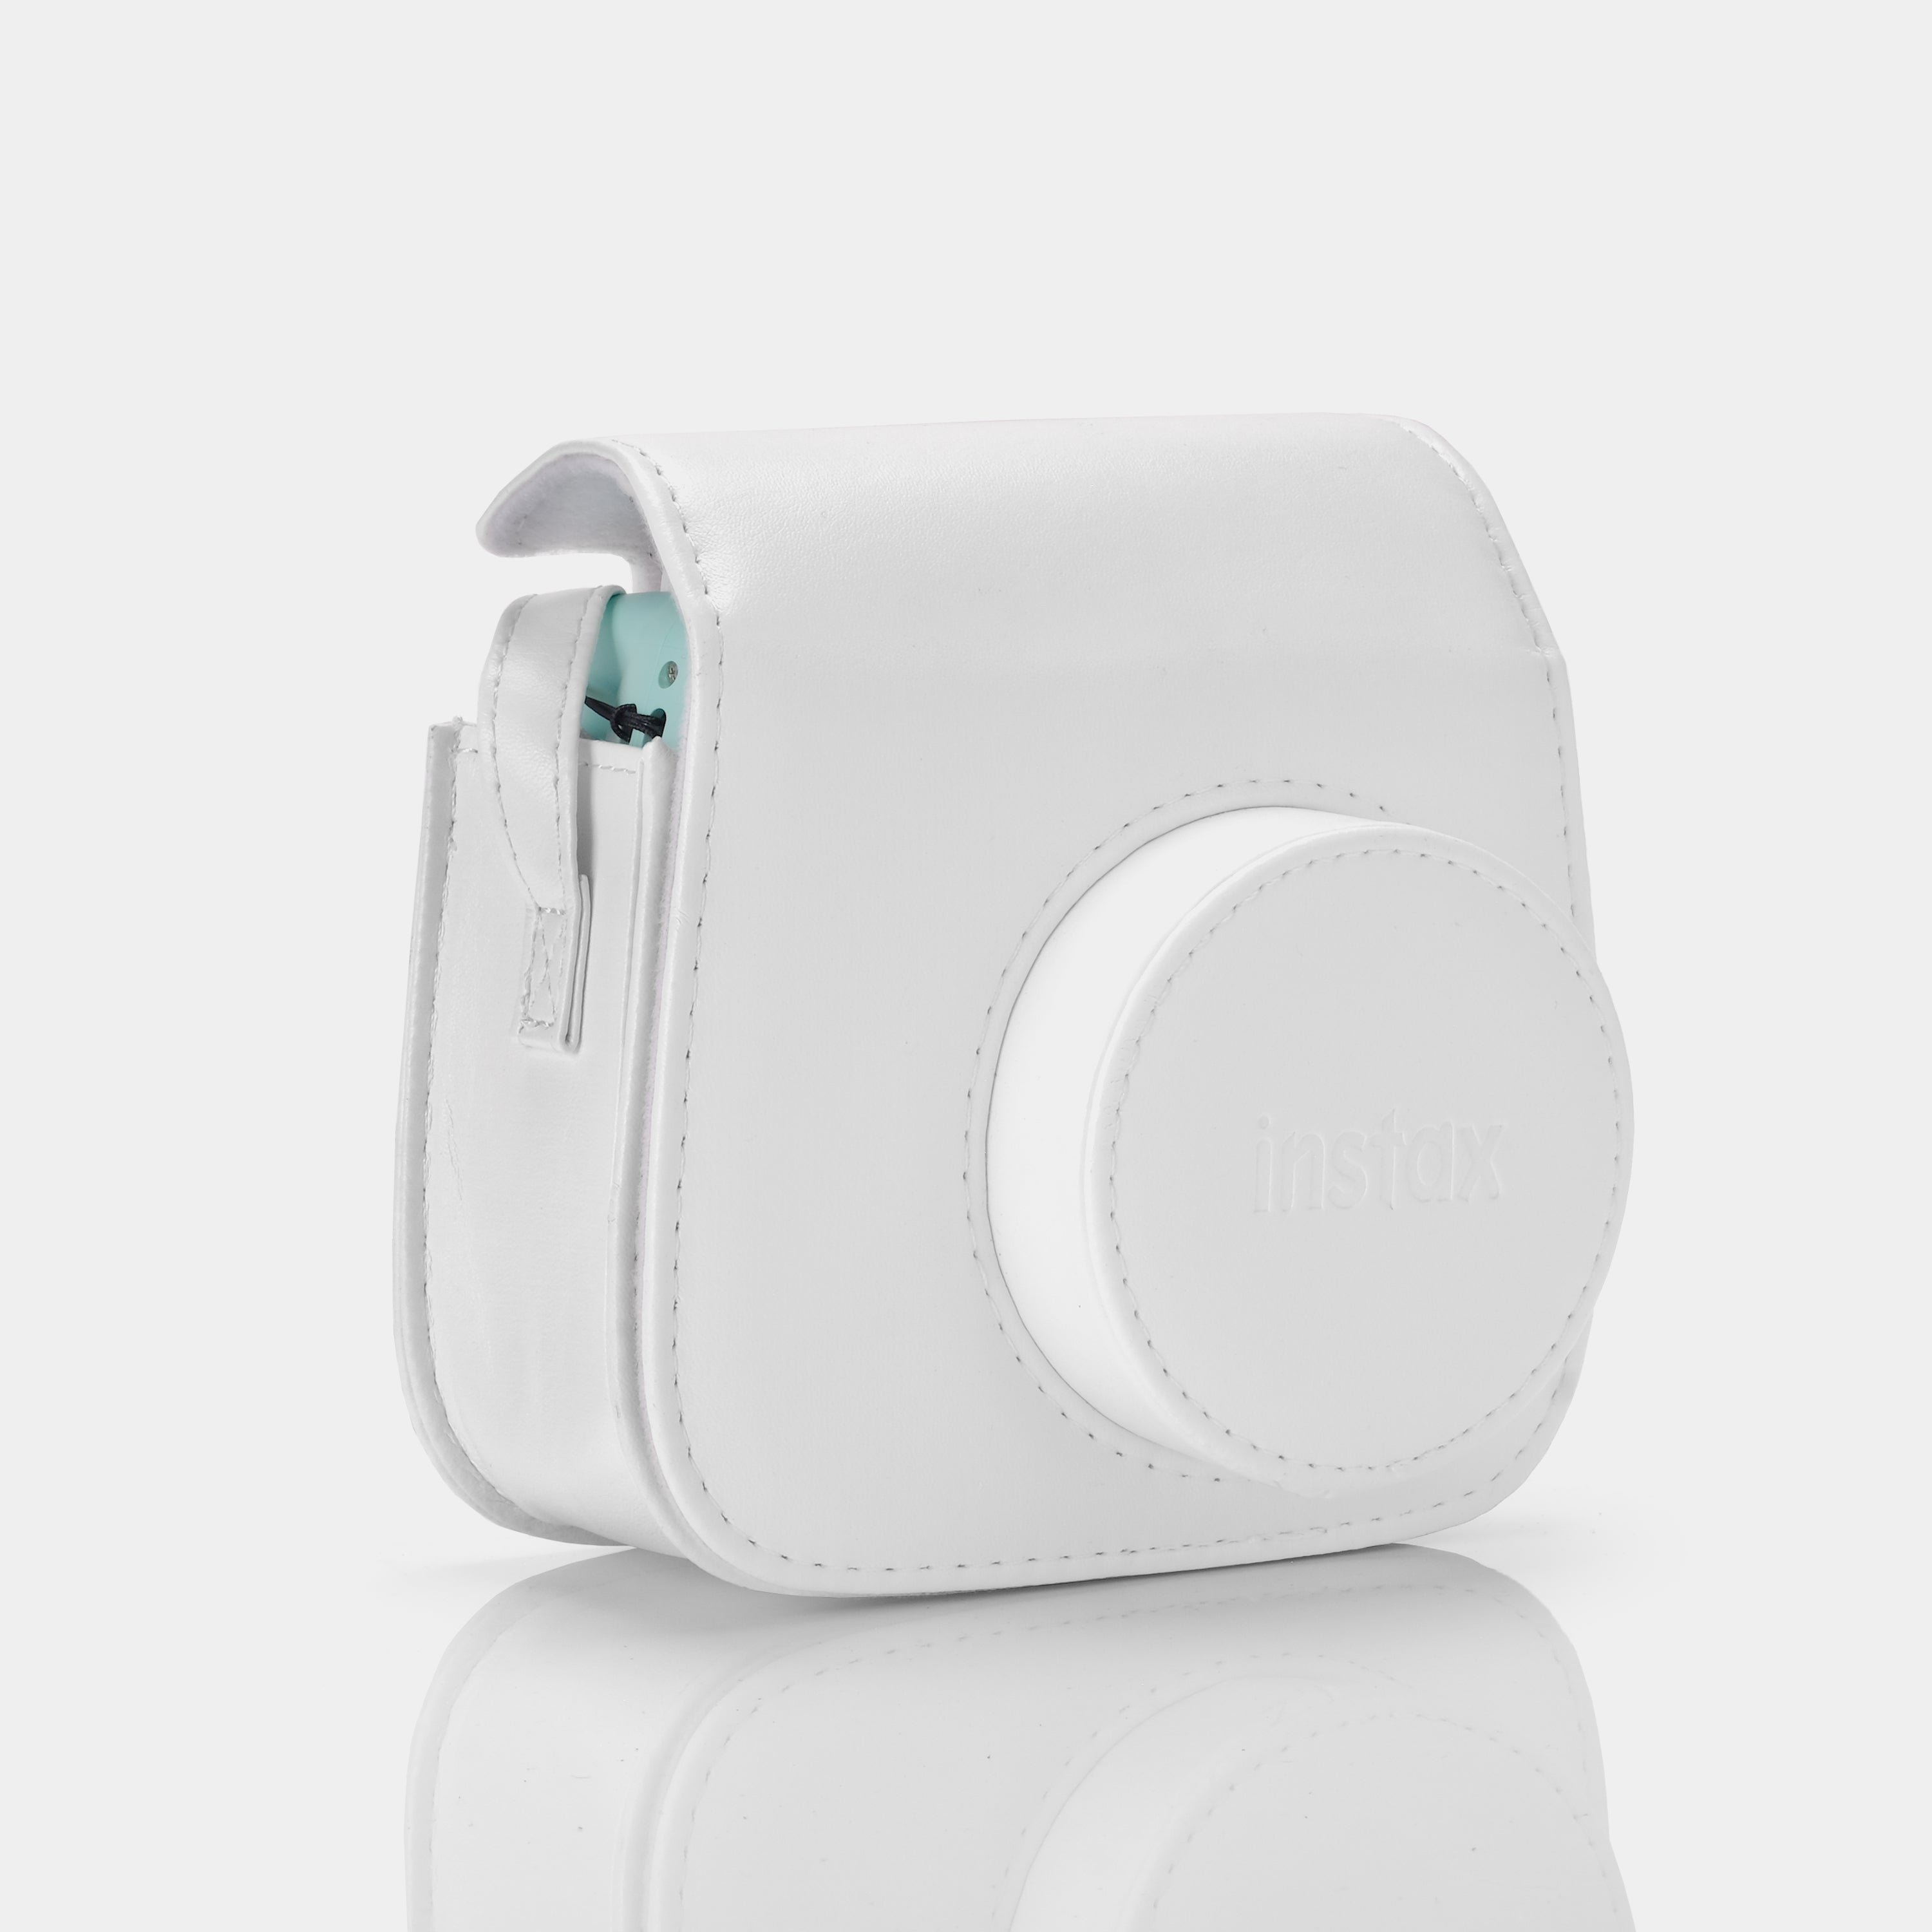 Fujifilm Instax Mini 9 Teal Instant Film Camera With White Bag - Refurbished